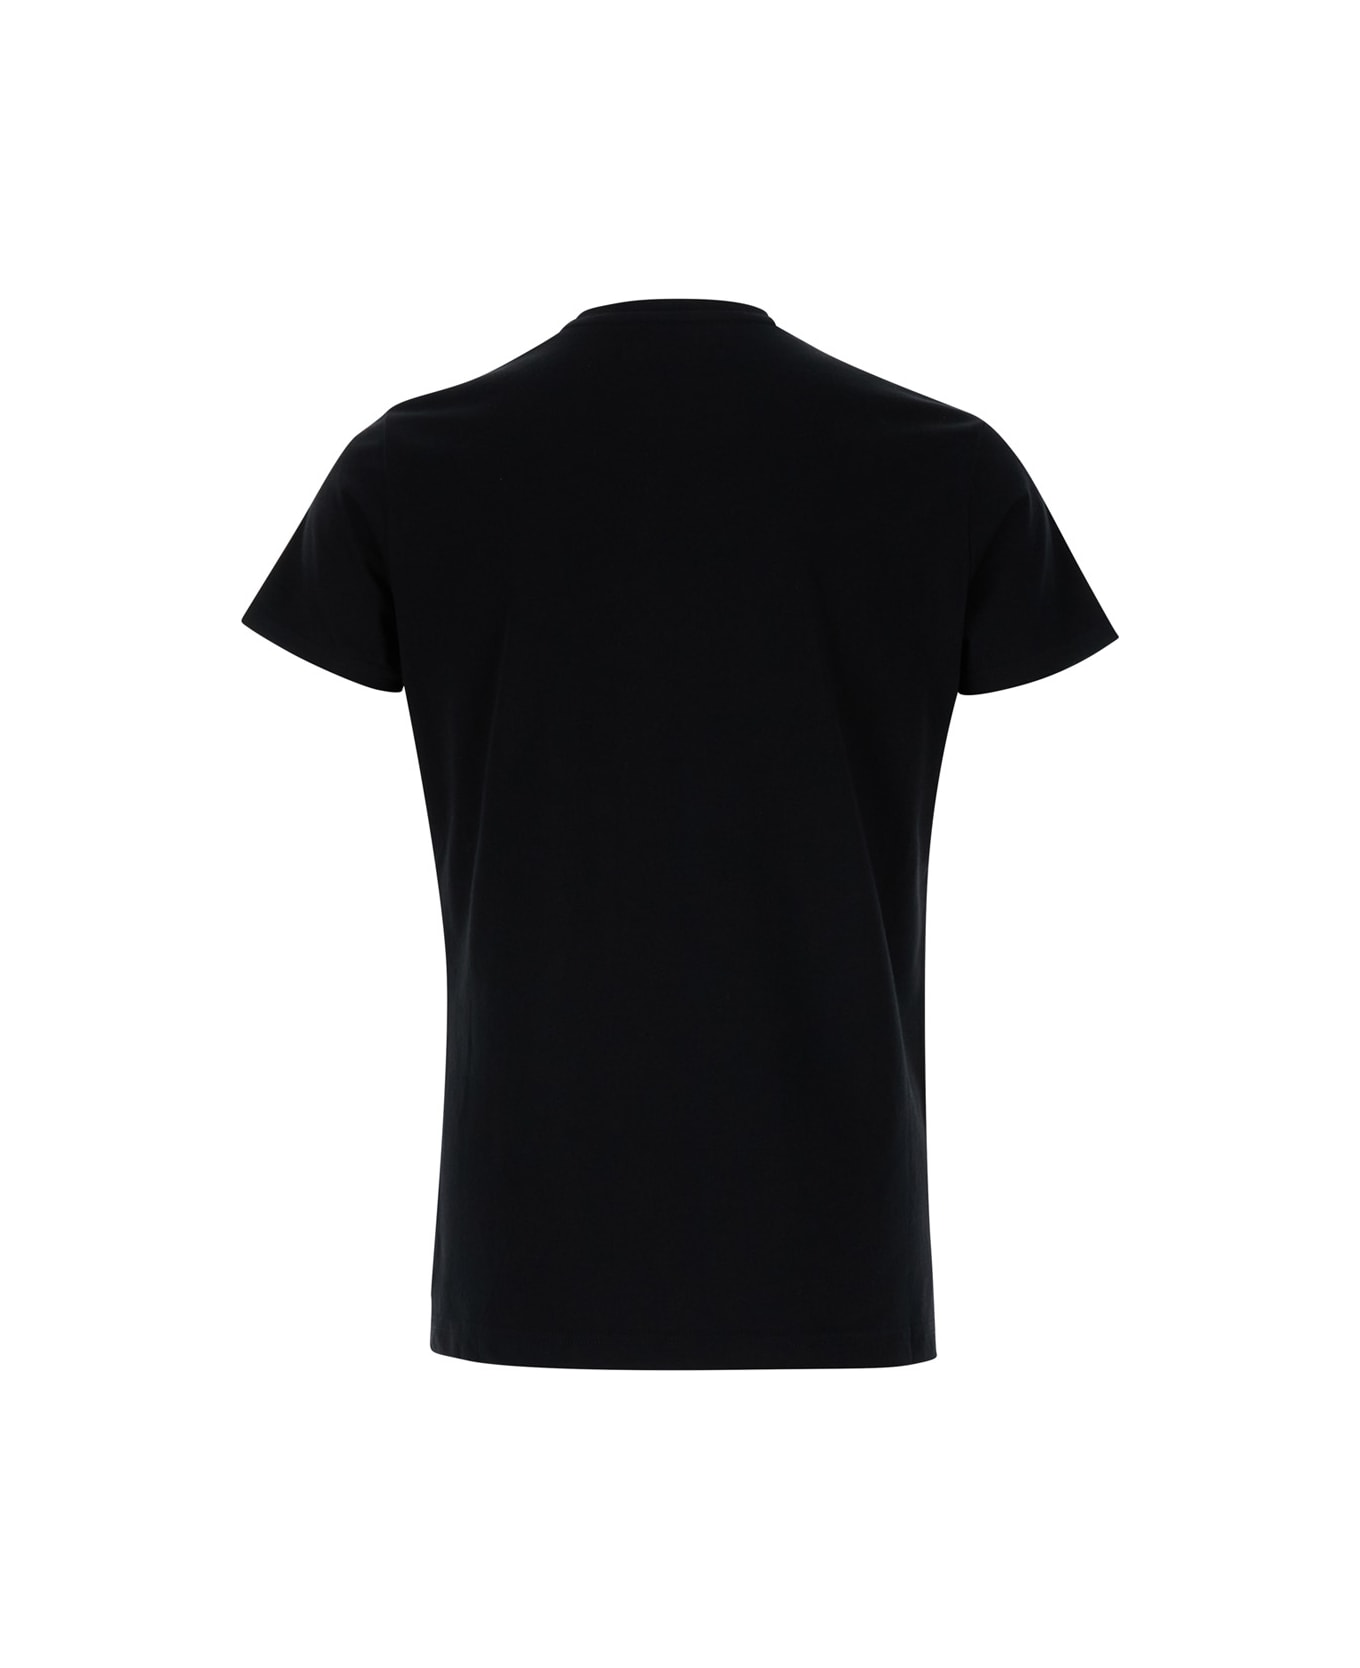 Vivienne Westwood T-shirt - Black シャツ